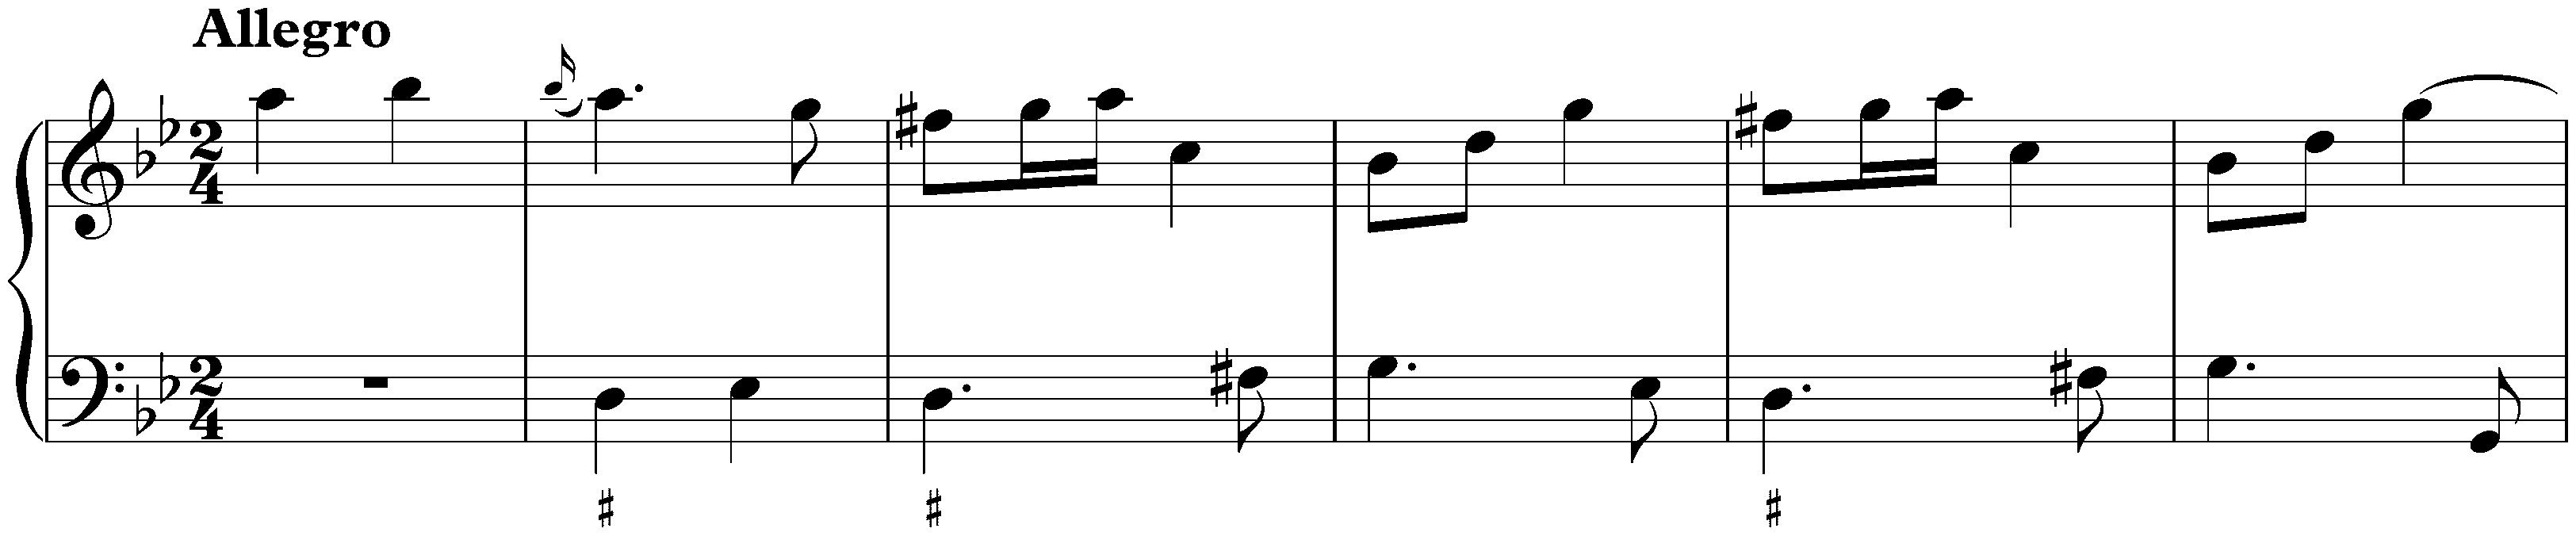 Sonata in G minor, K. 88; 3. Allegro